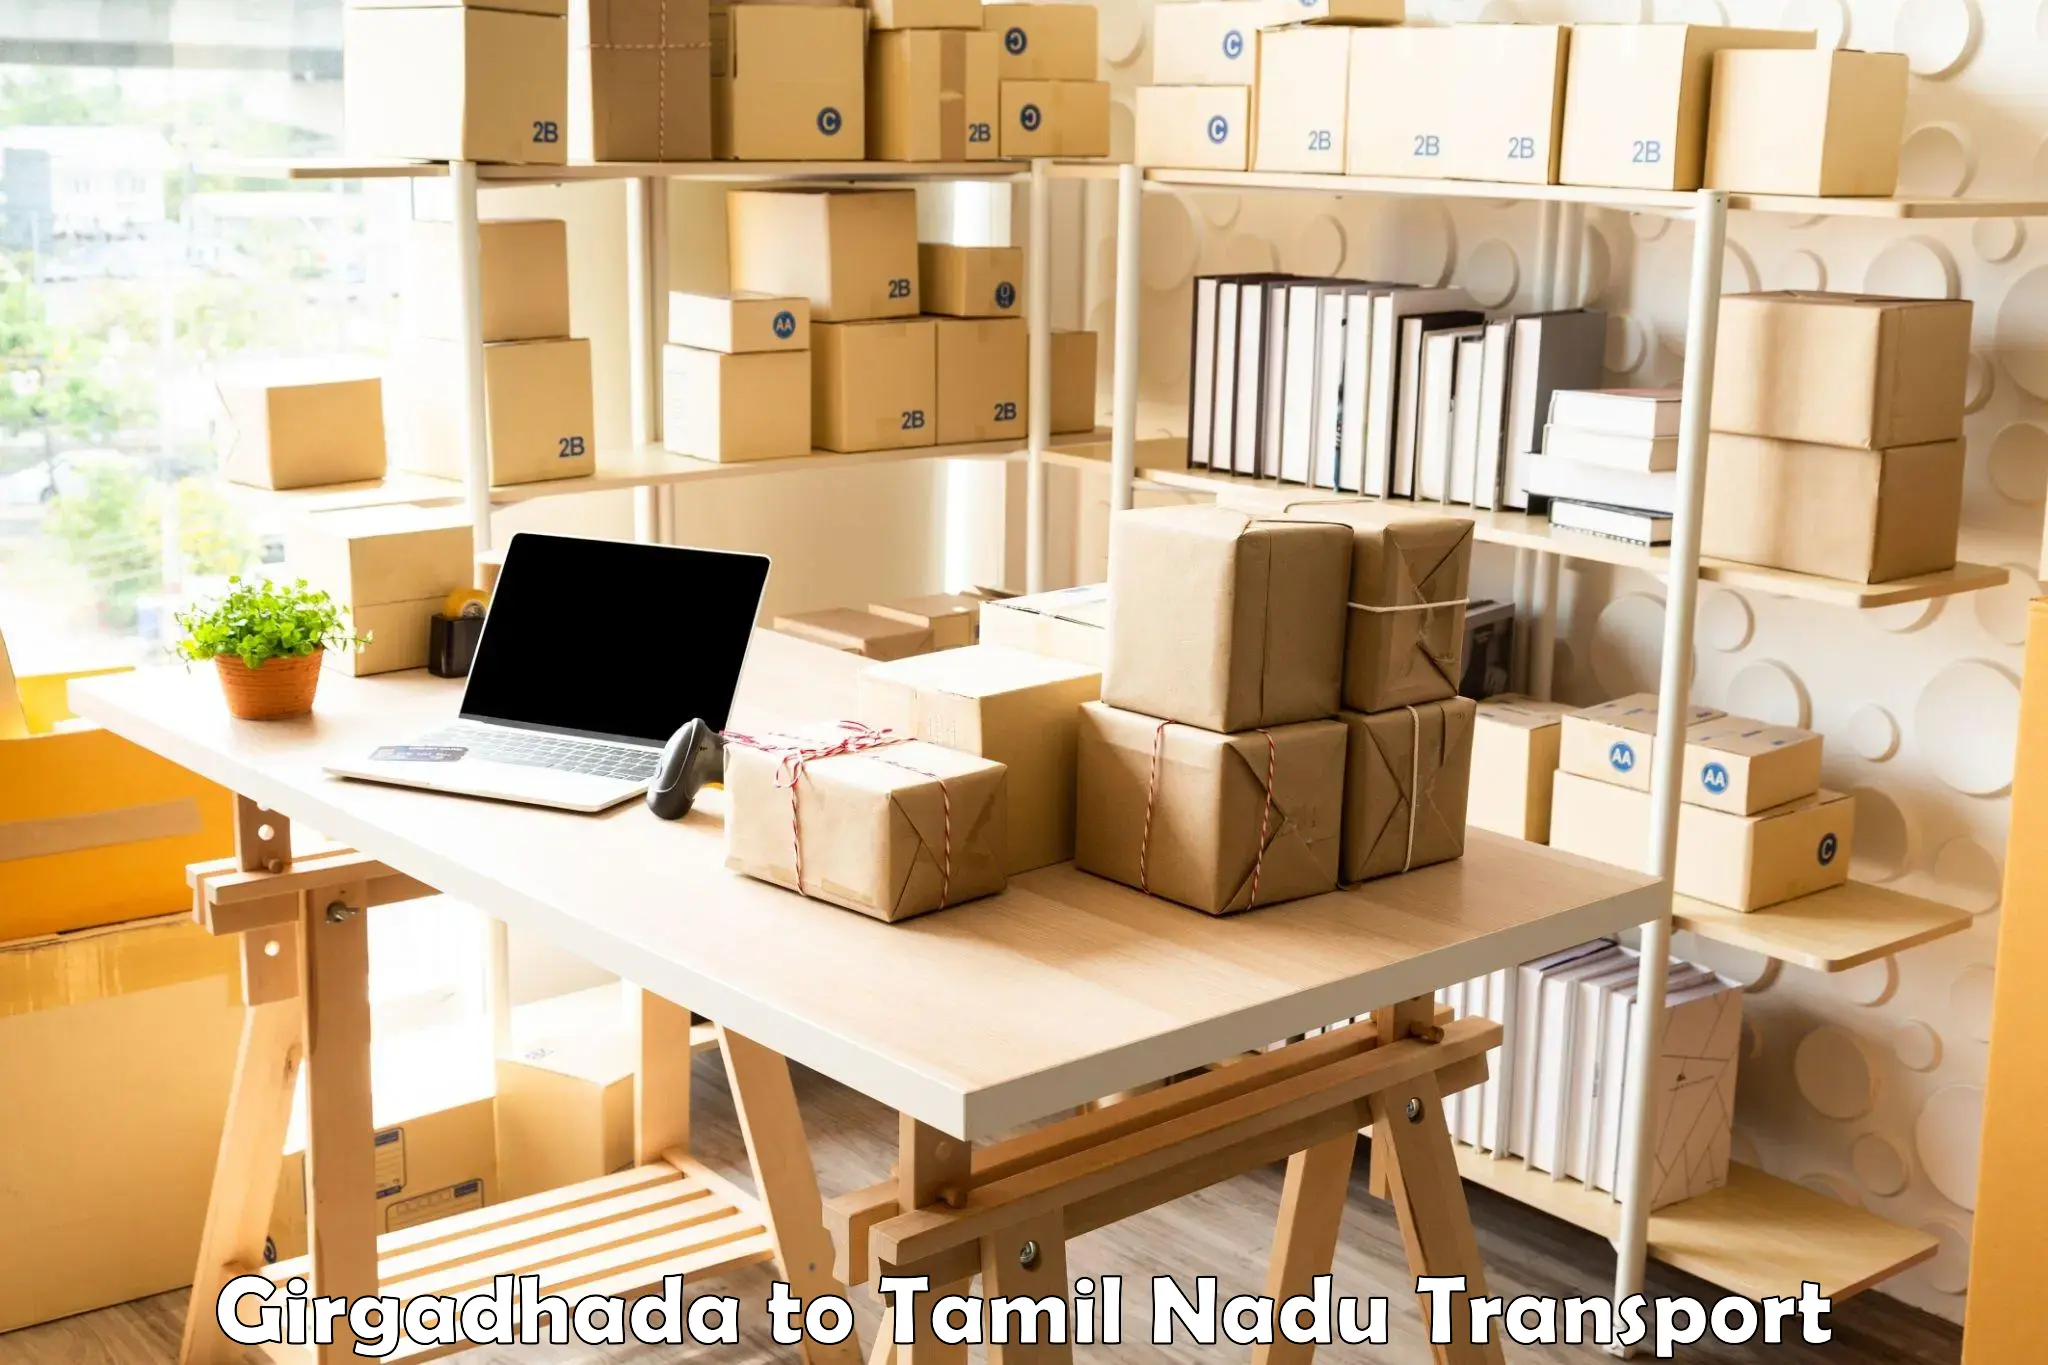 Logistics transportation services Girgadhada to Thuckalay